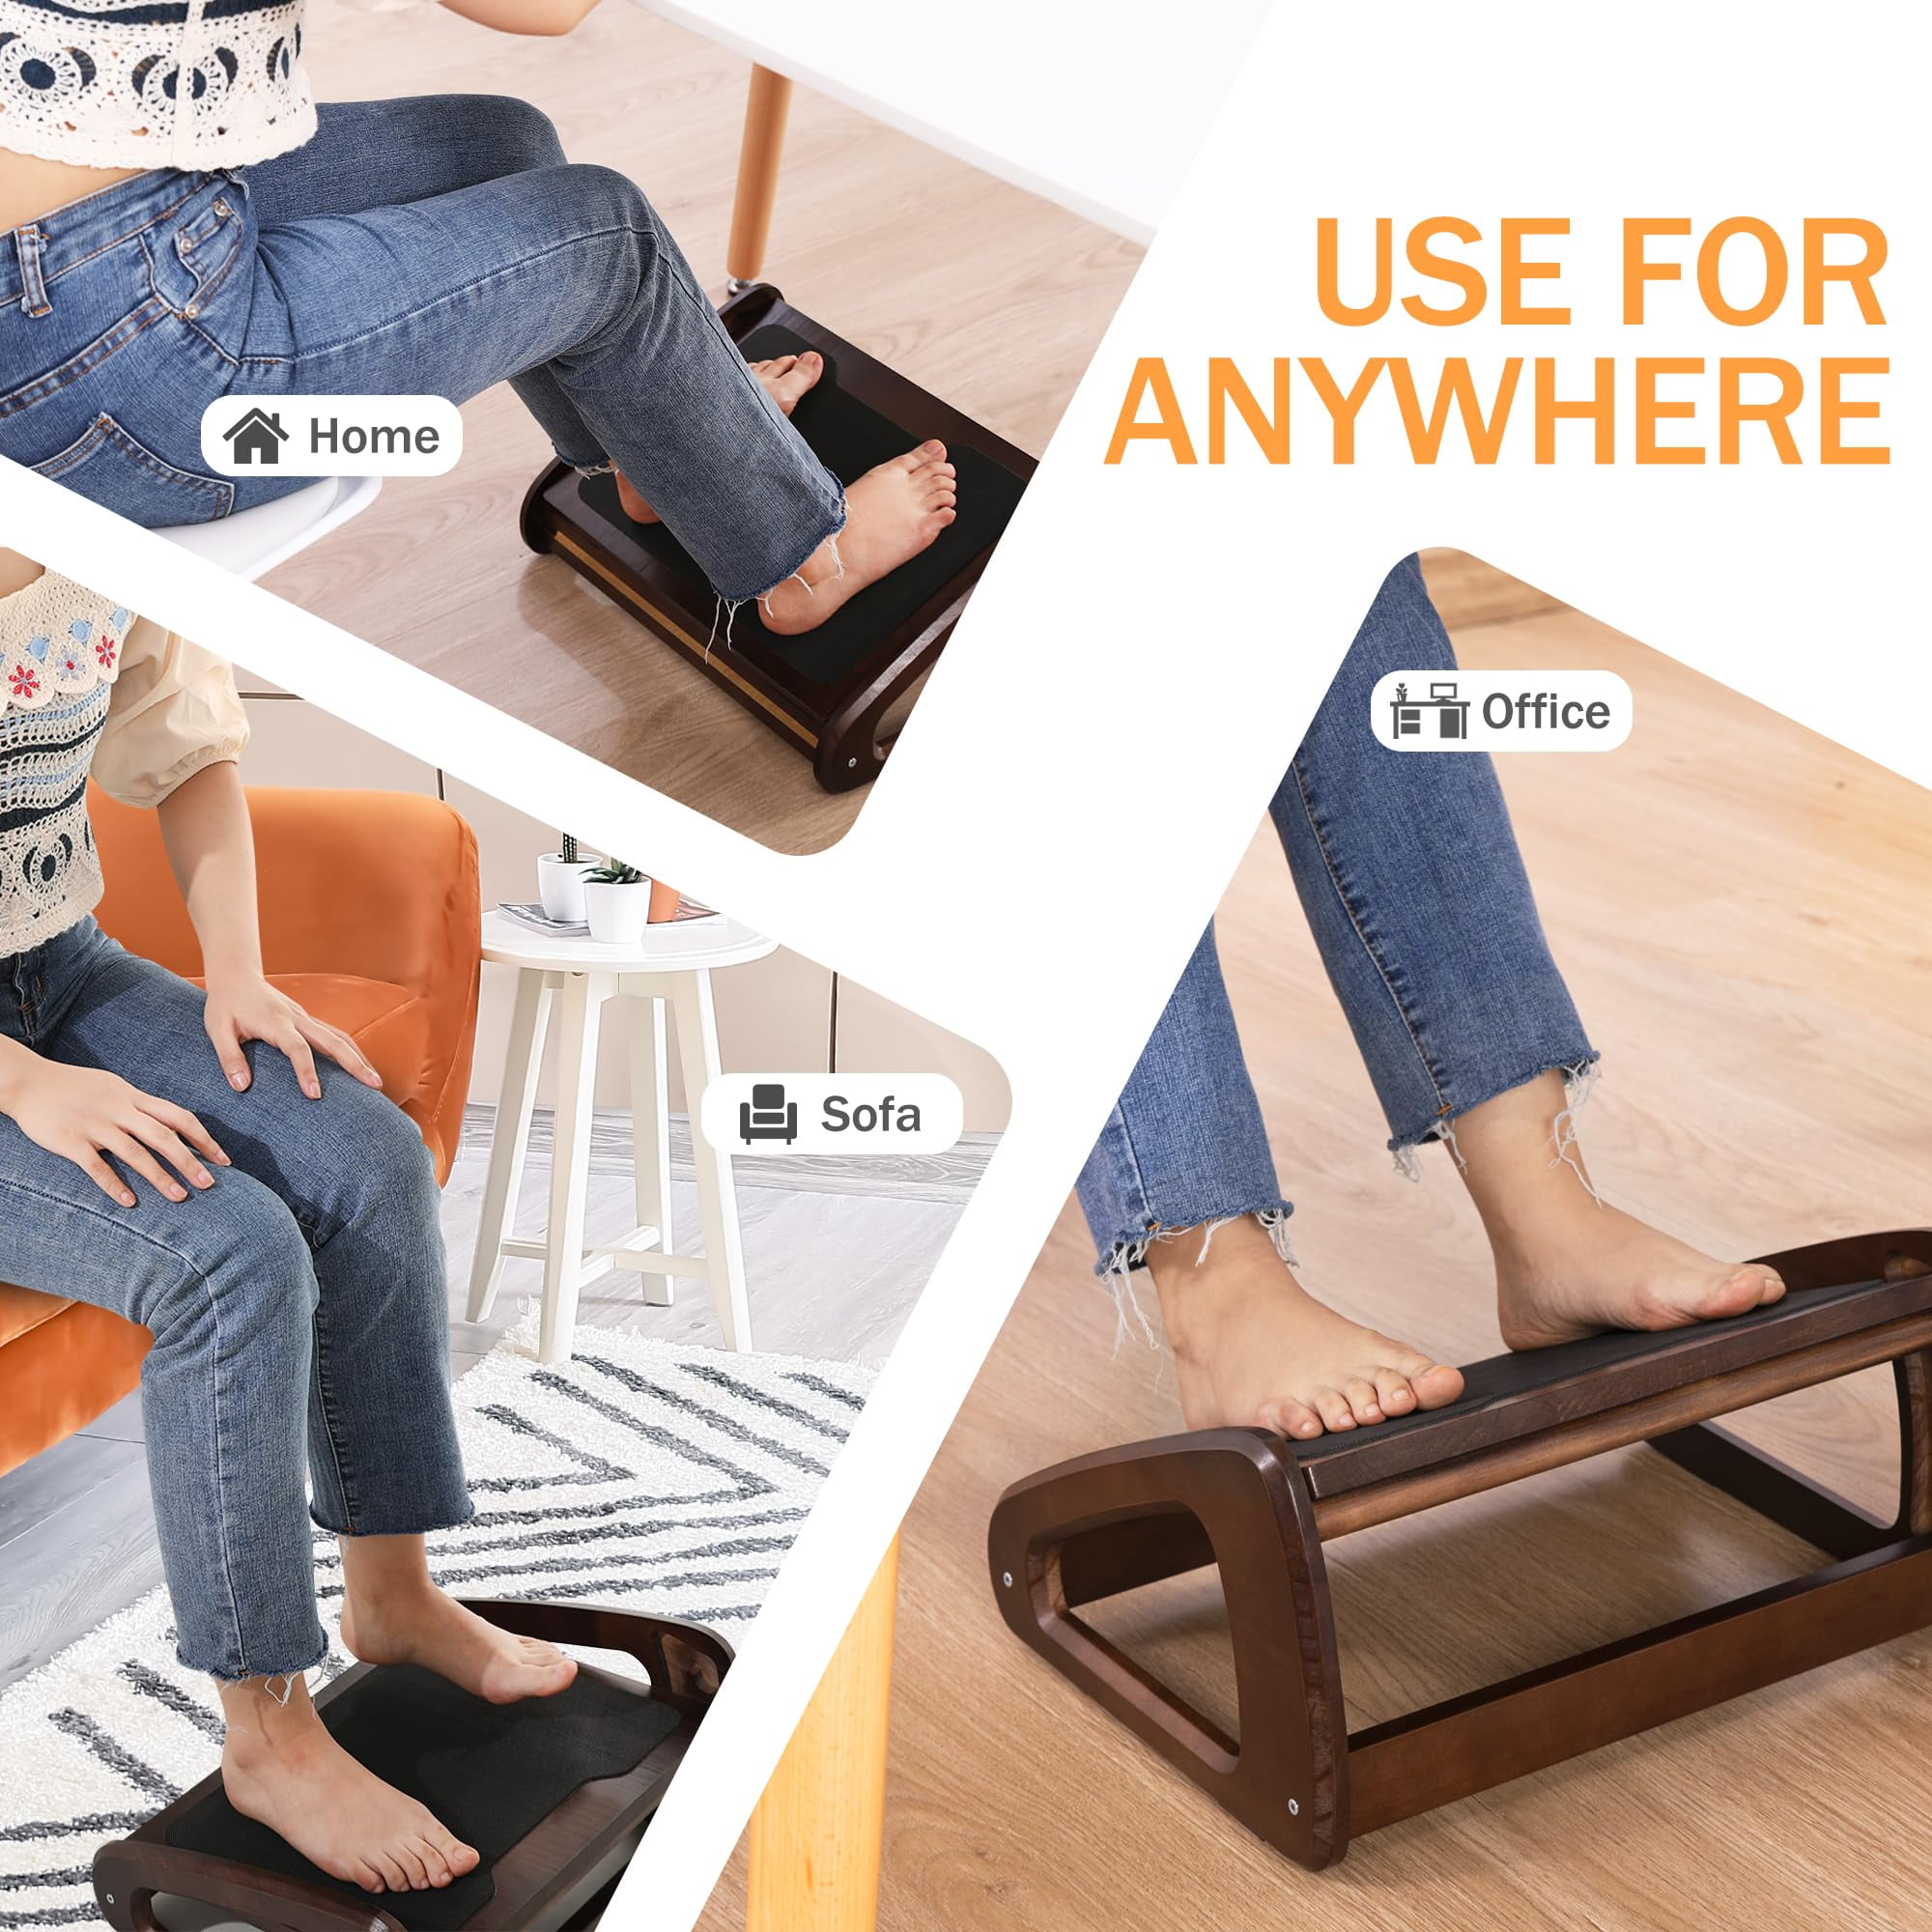 Wood Under Desk Footrest, 3 Height Position Footrest Cushion Portable Foot Rest Light, Size: 1XL, Brown